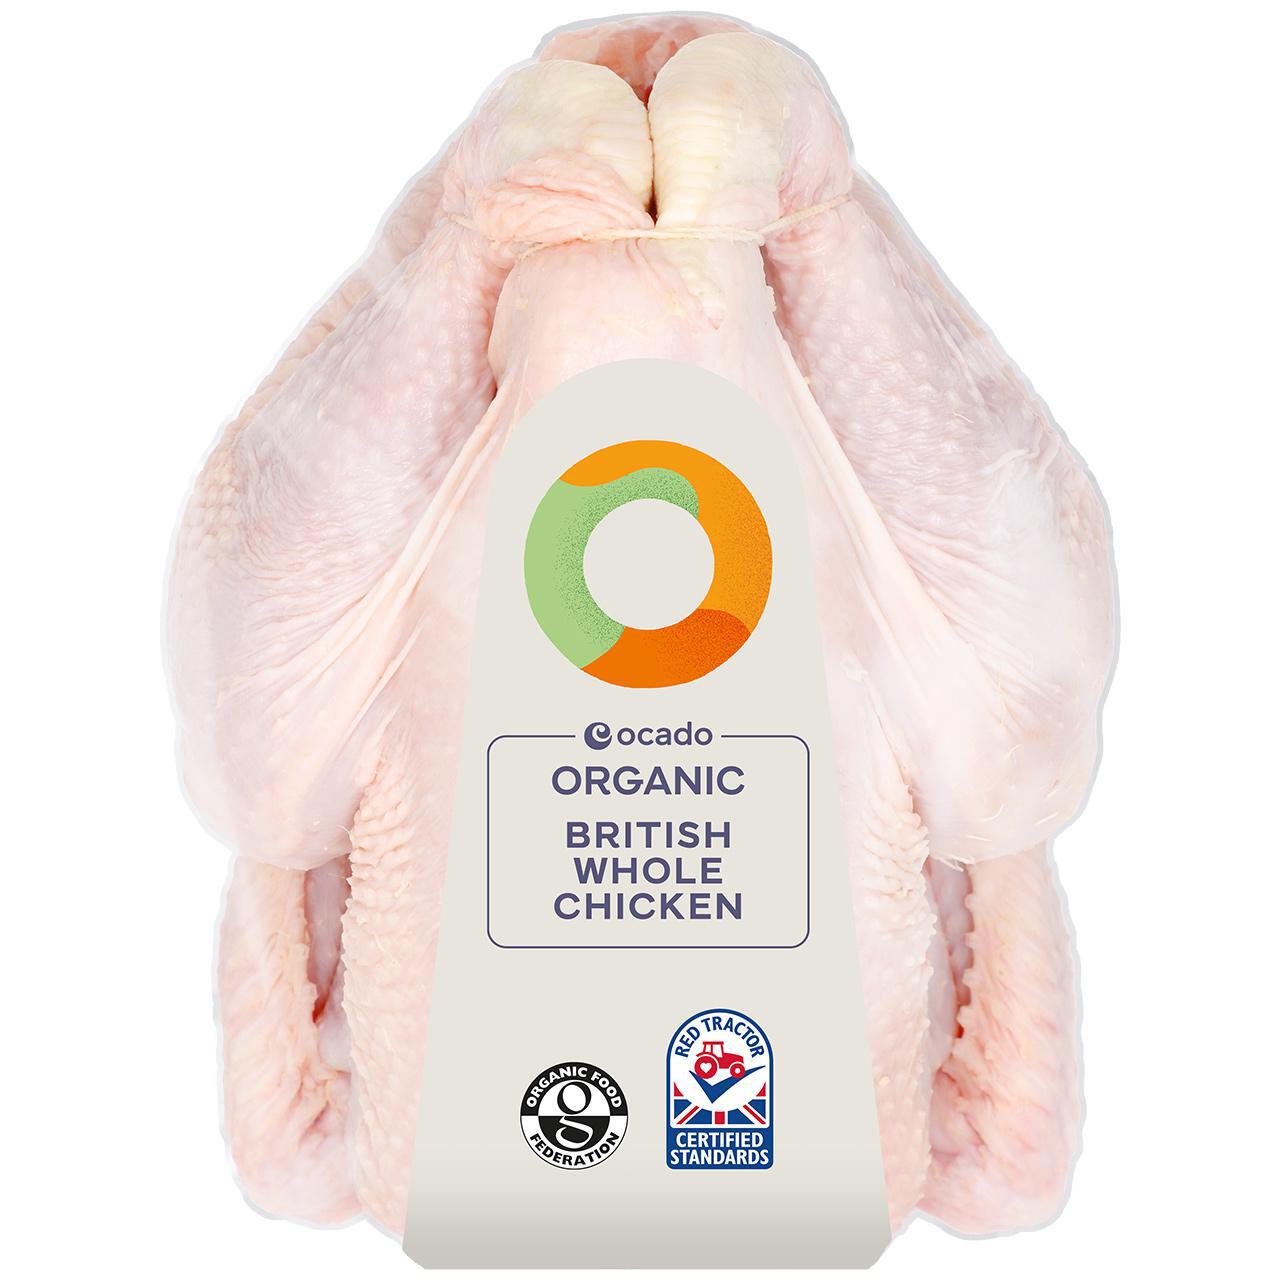 Ocado Organic Whole Chicken Typically: 1800g